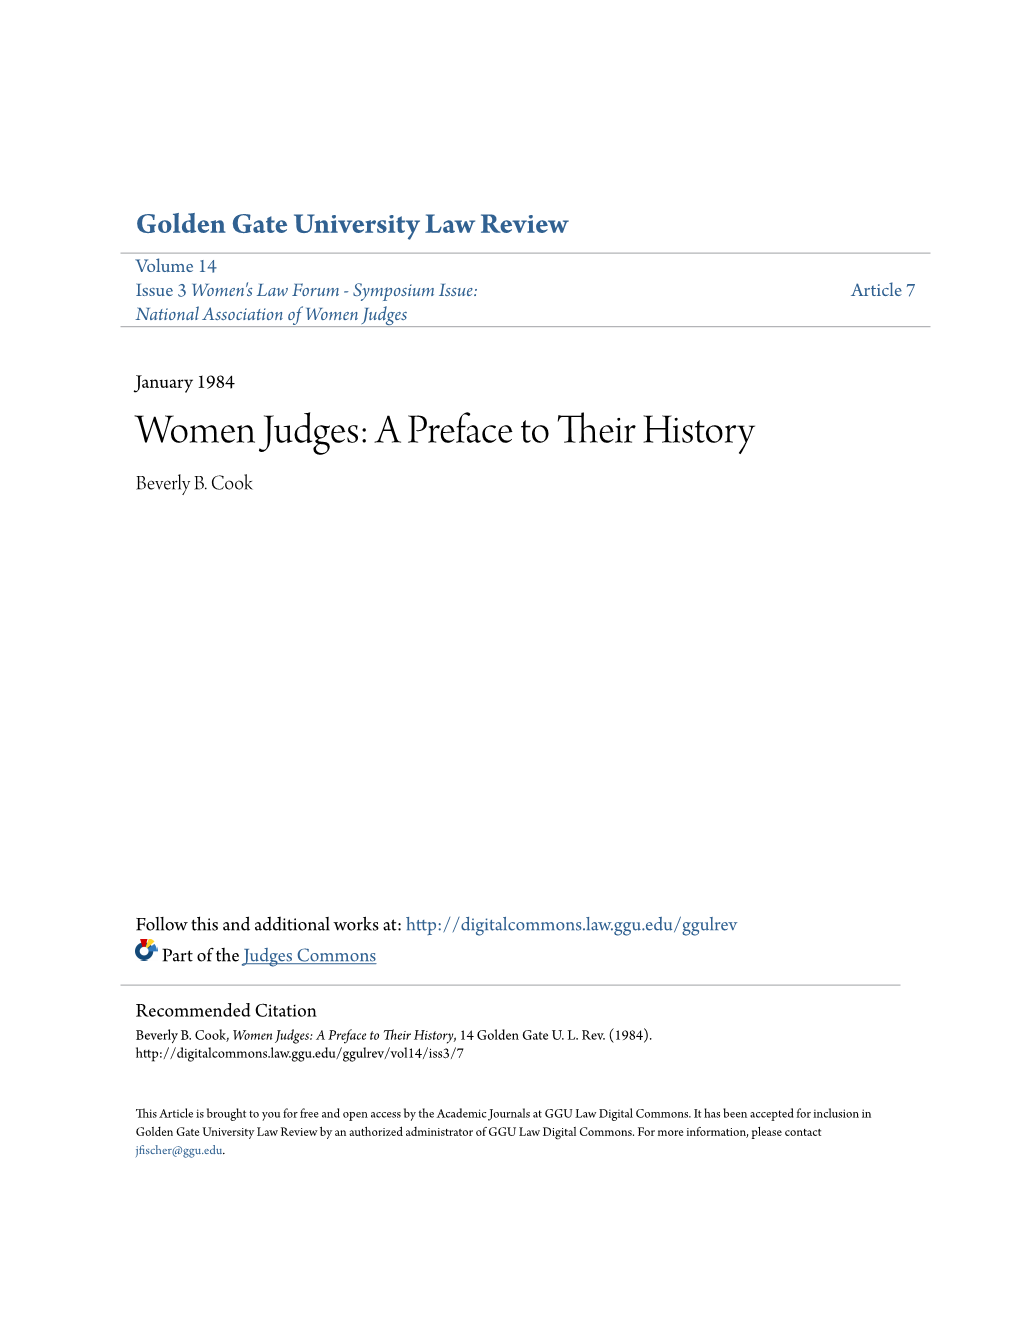 Women Judges: a Preface to Their History, 14 Golden Gate U